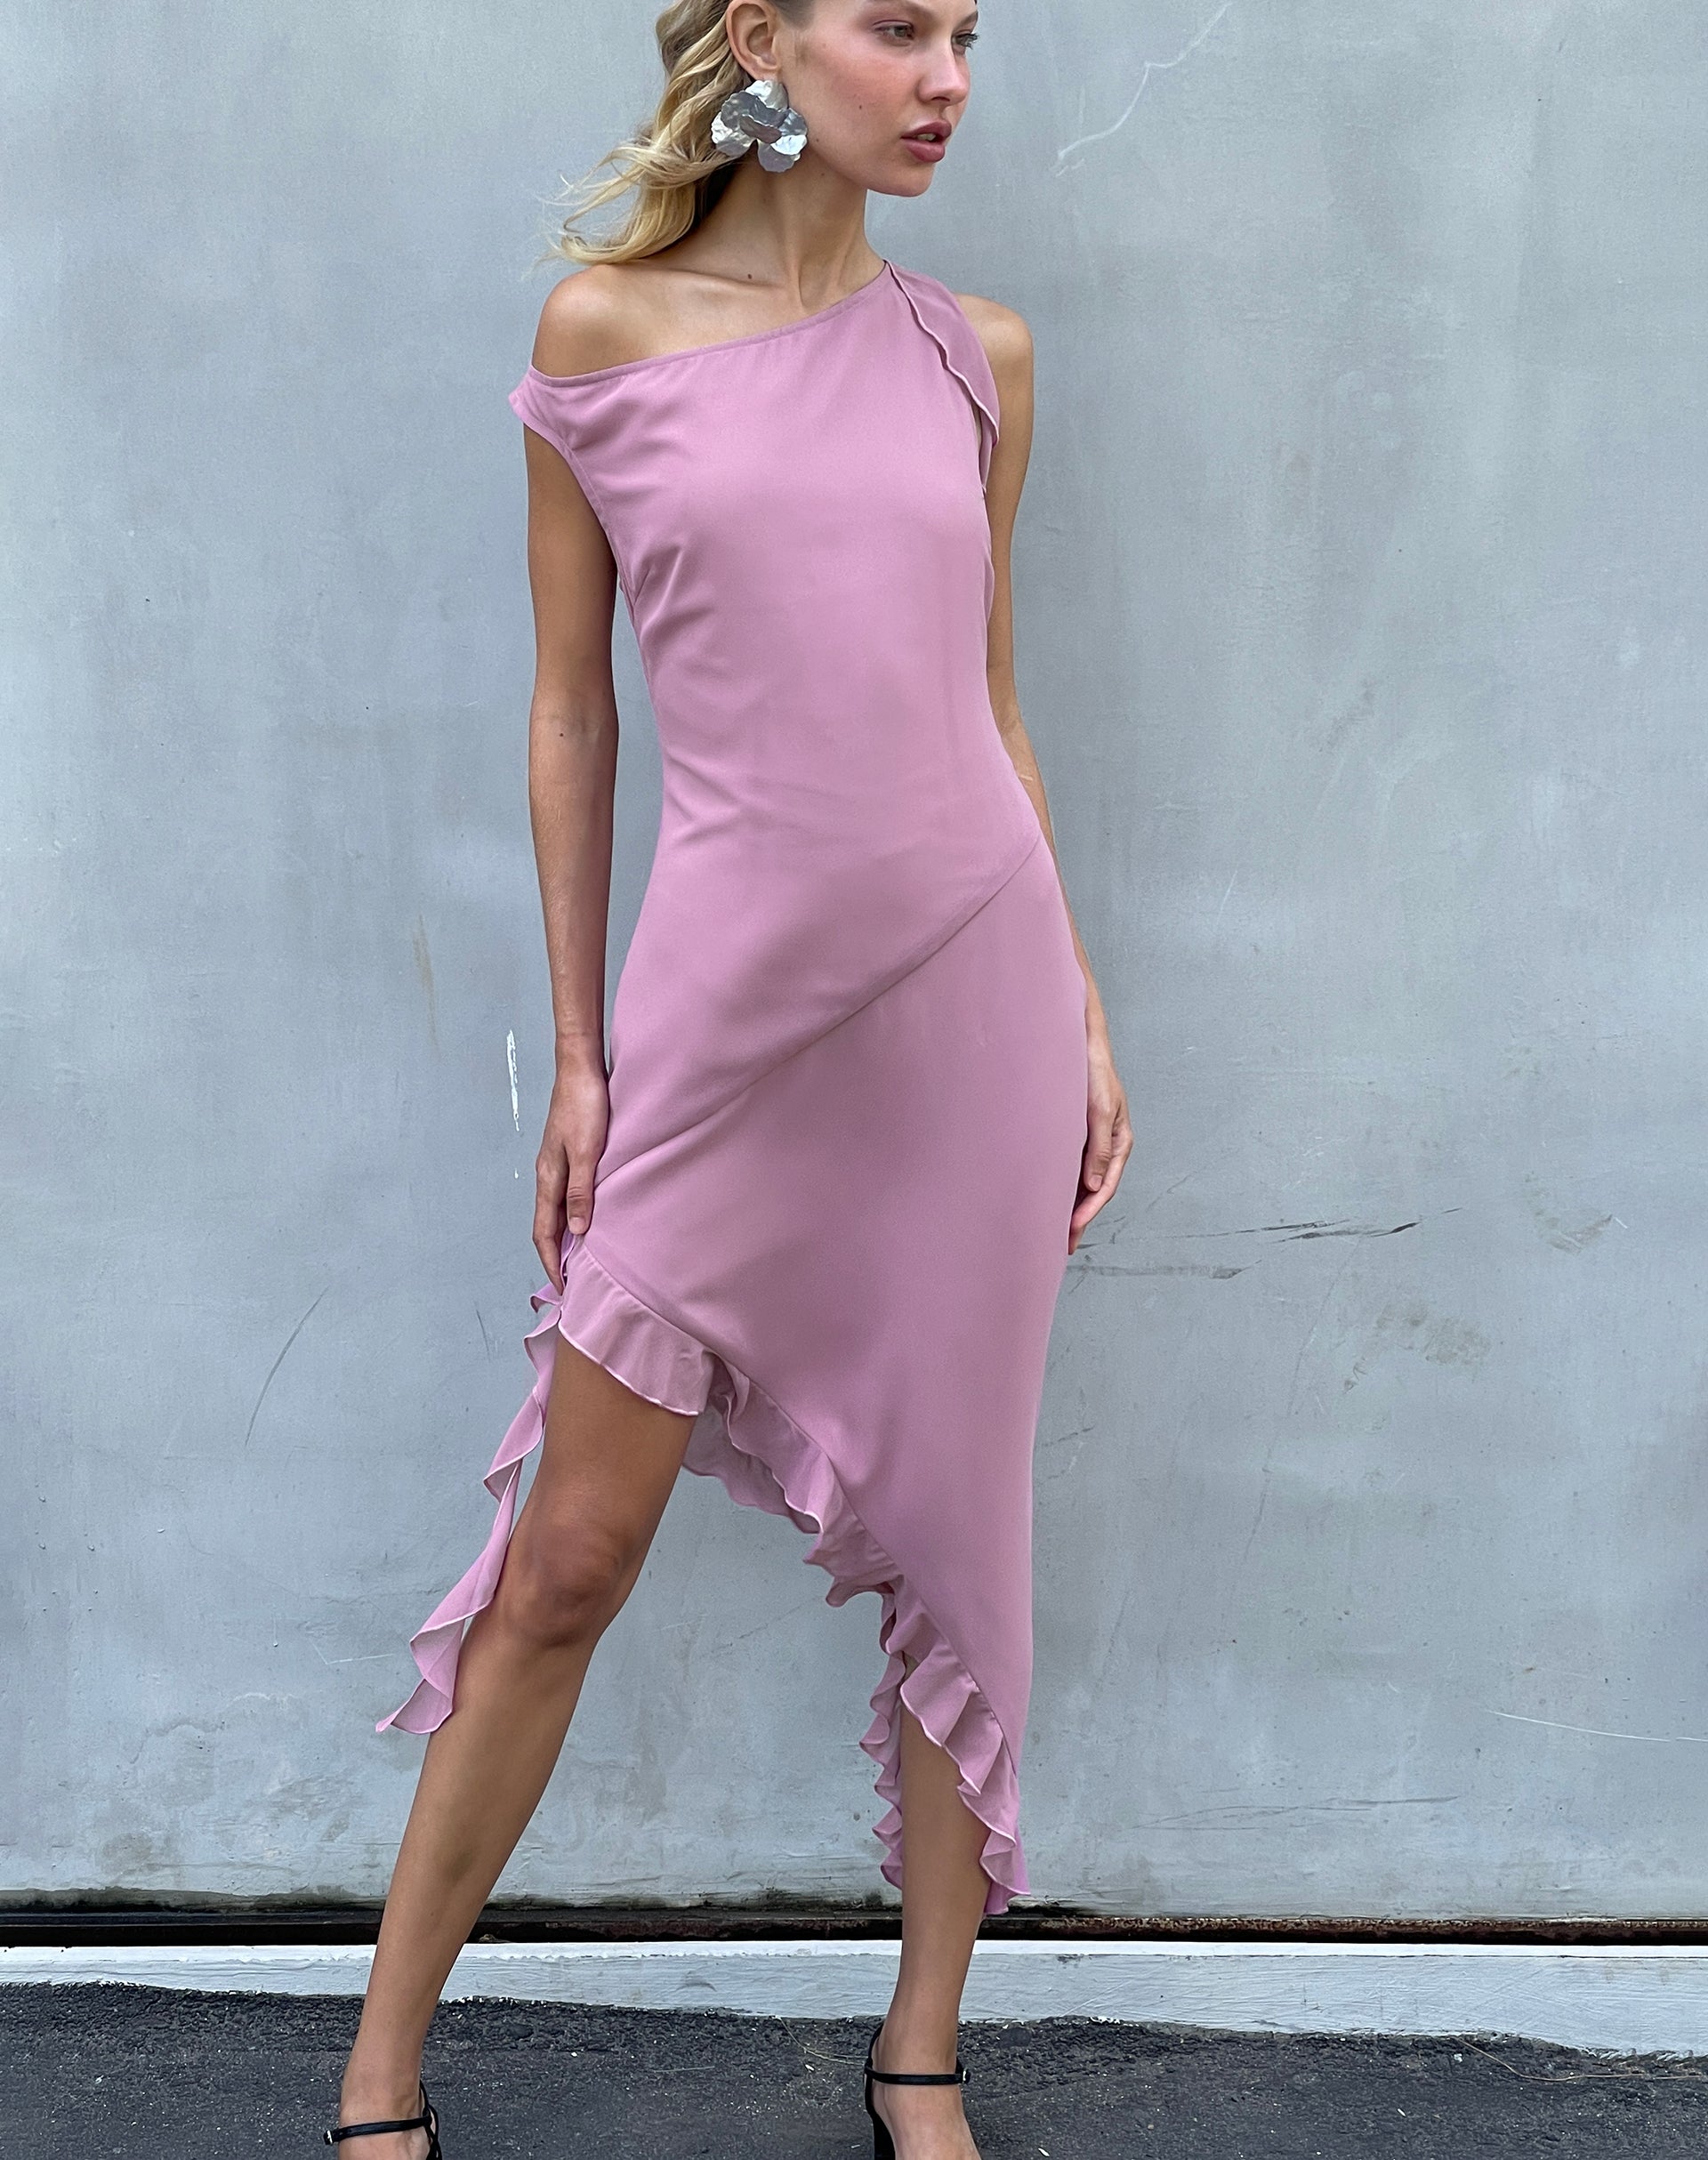 Image of Beleri Ruffle Asymmetric Dress in Pink Chiffon